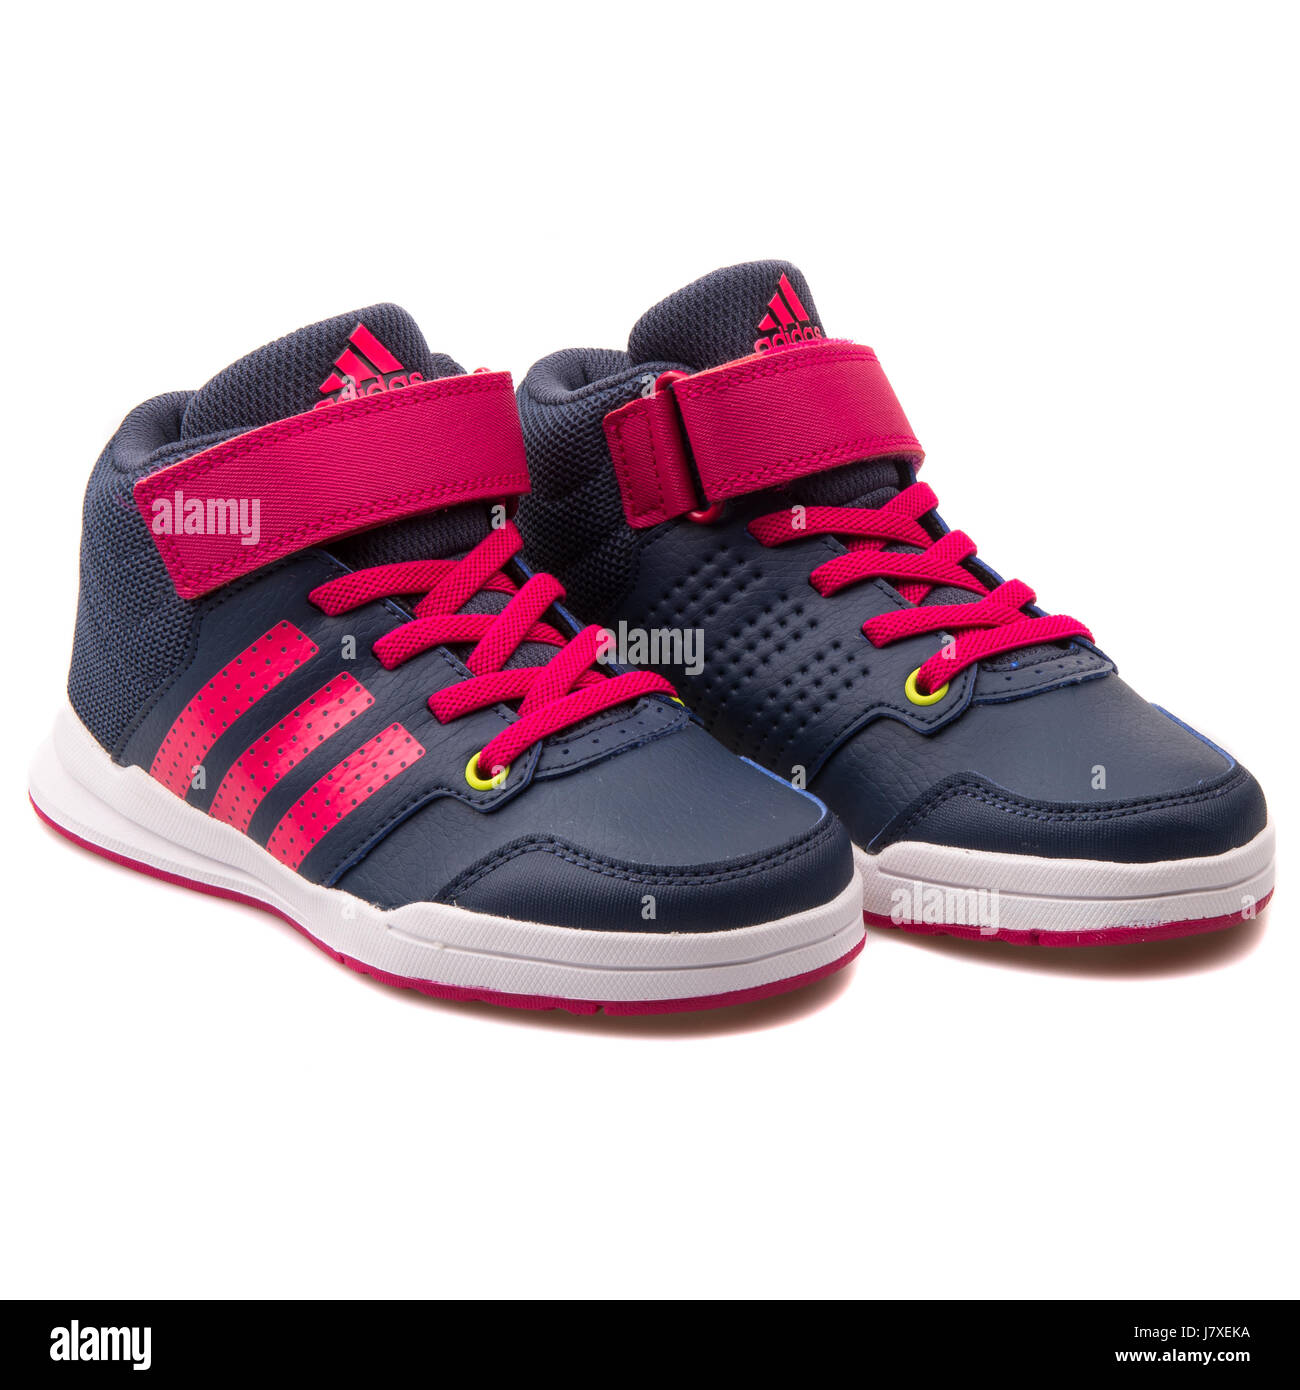 Adidas Jan BS 2 mediados C Kids zapatillas azul oscuro con tres rayas rosas  - B23908 Fotografía de stock - Alamy